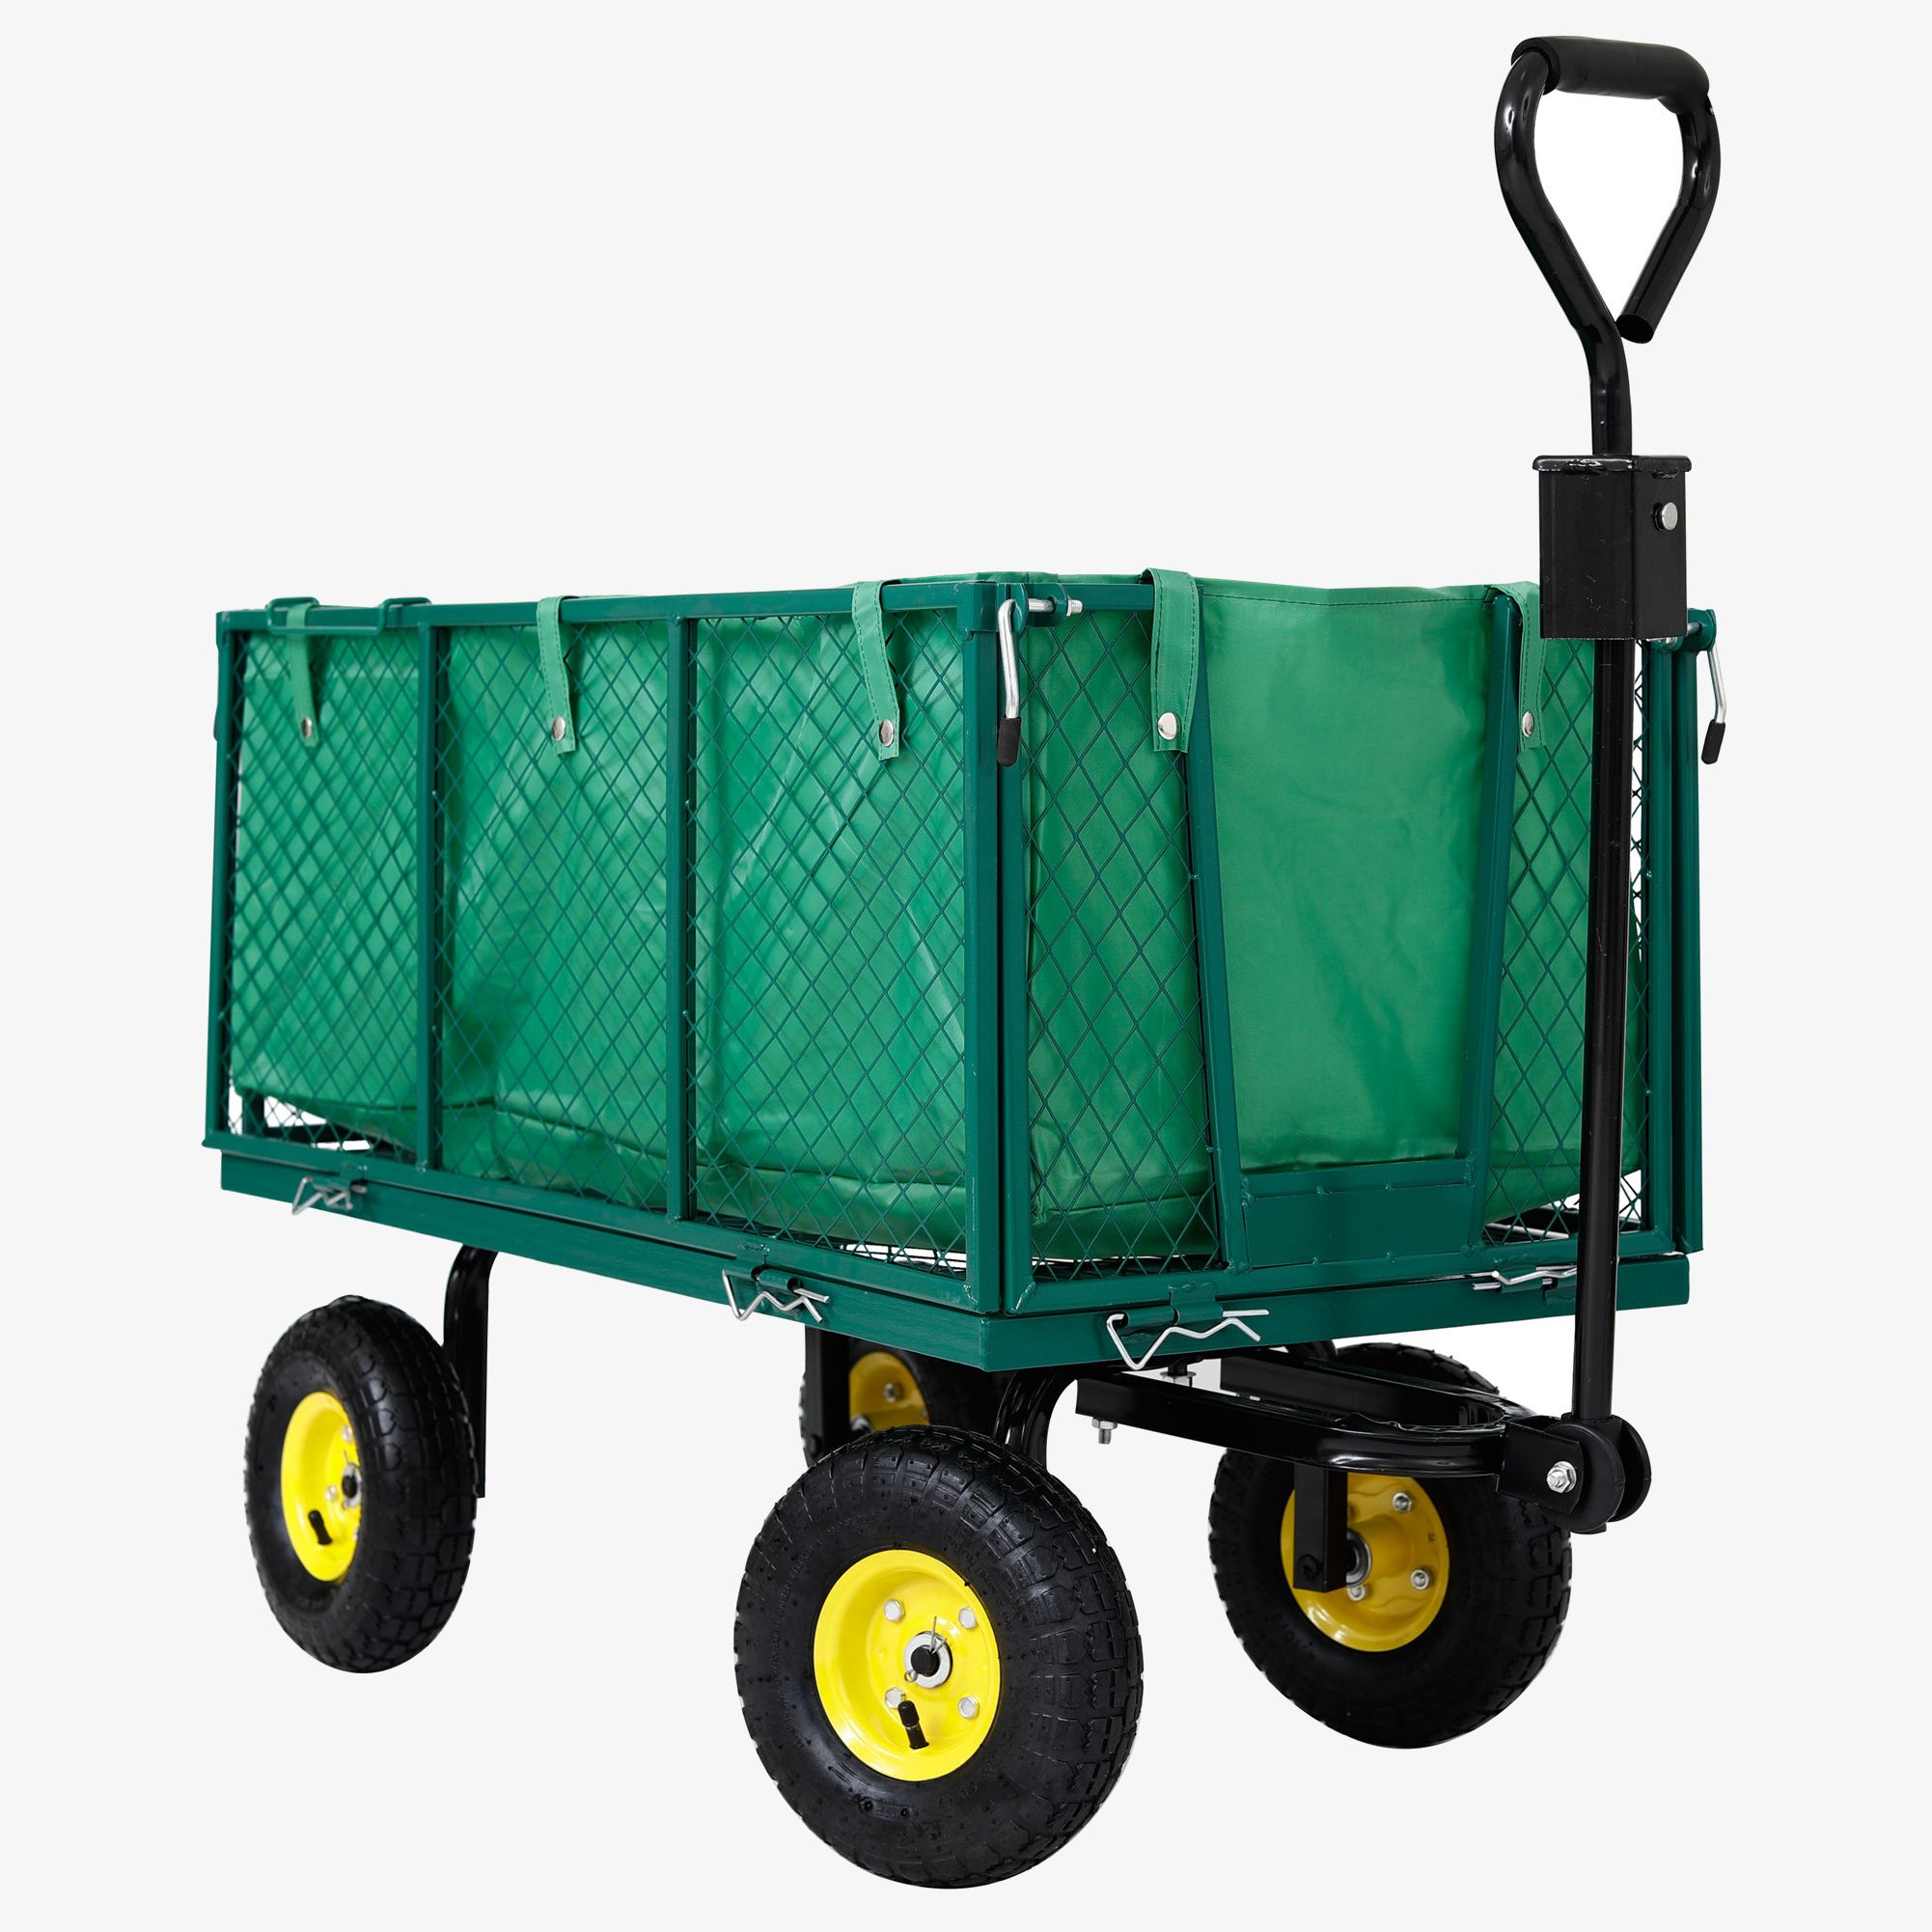 Chariot de Transport 550kg Vert - 4260627423330 - Categories Spéciales